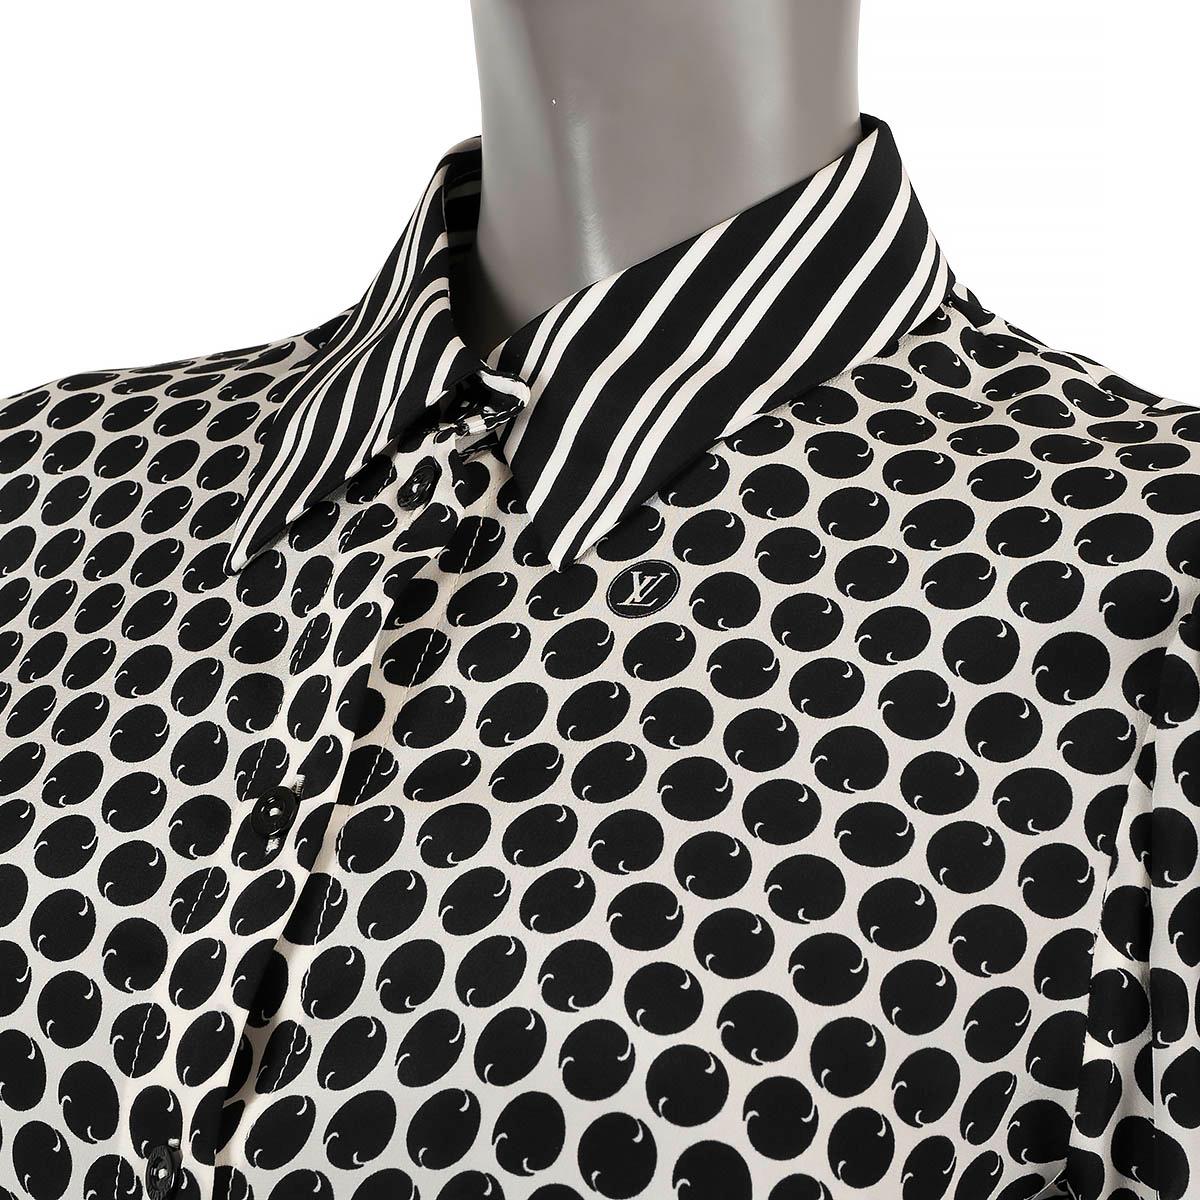 LOUIS VUITTON black & white silk 2019 DOTTED Blouse Shirt 36 XS For Sale 1